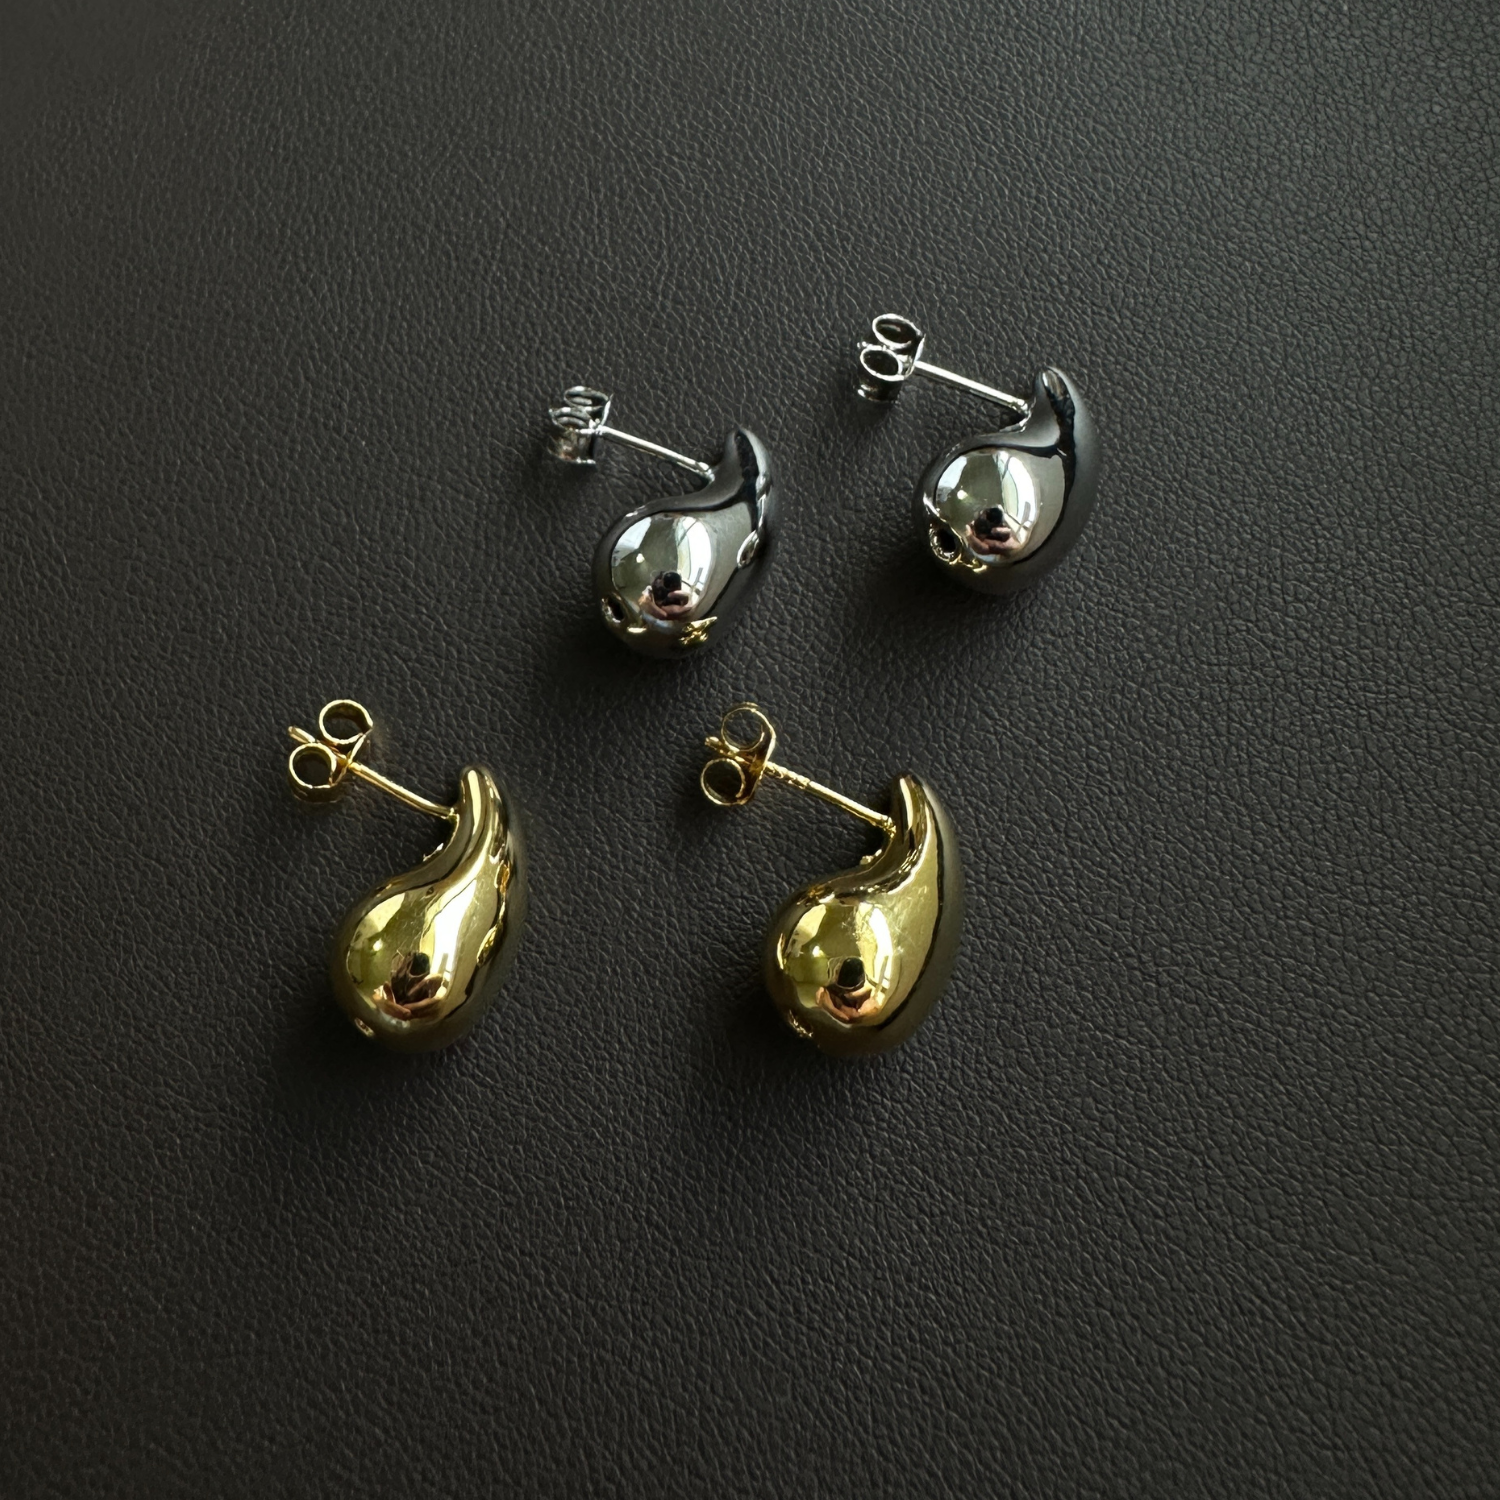 Close-up of sterling silver teardrop stud earrings